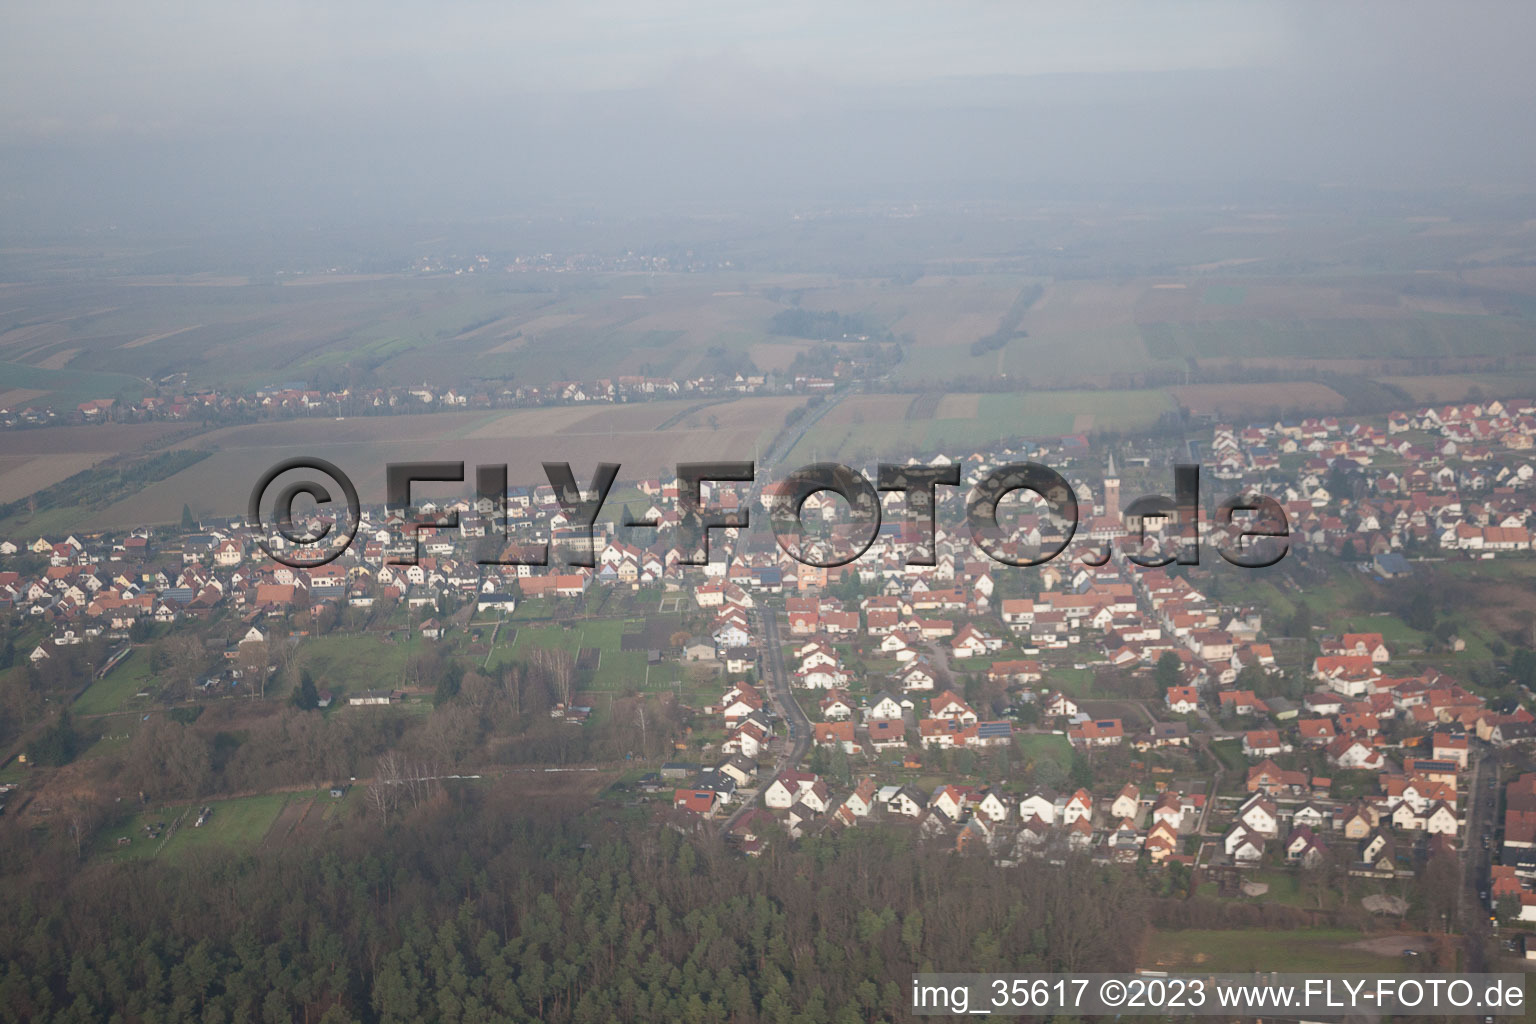 Aerial photograpy of District Schaidt in Wörth am Rhein in the state Rhineland-Palatinate, Germany